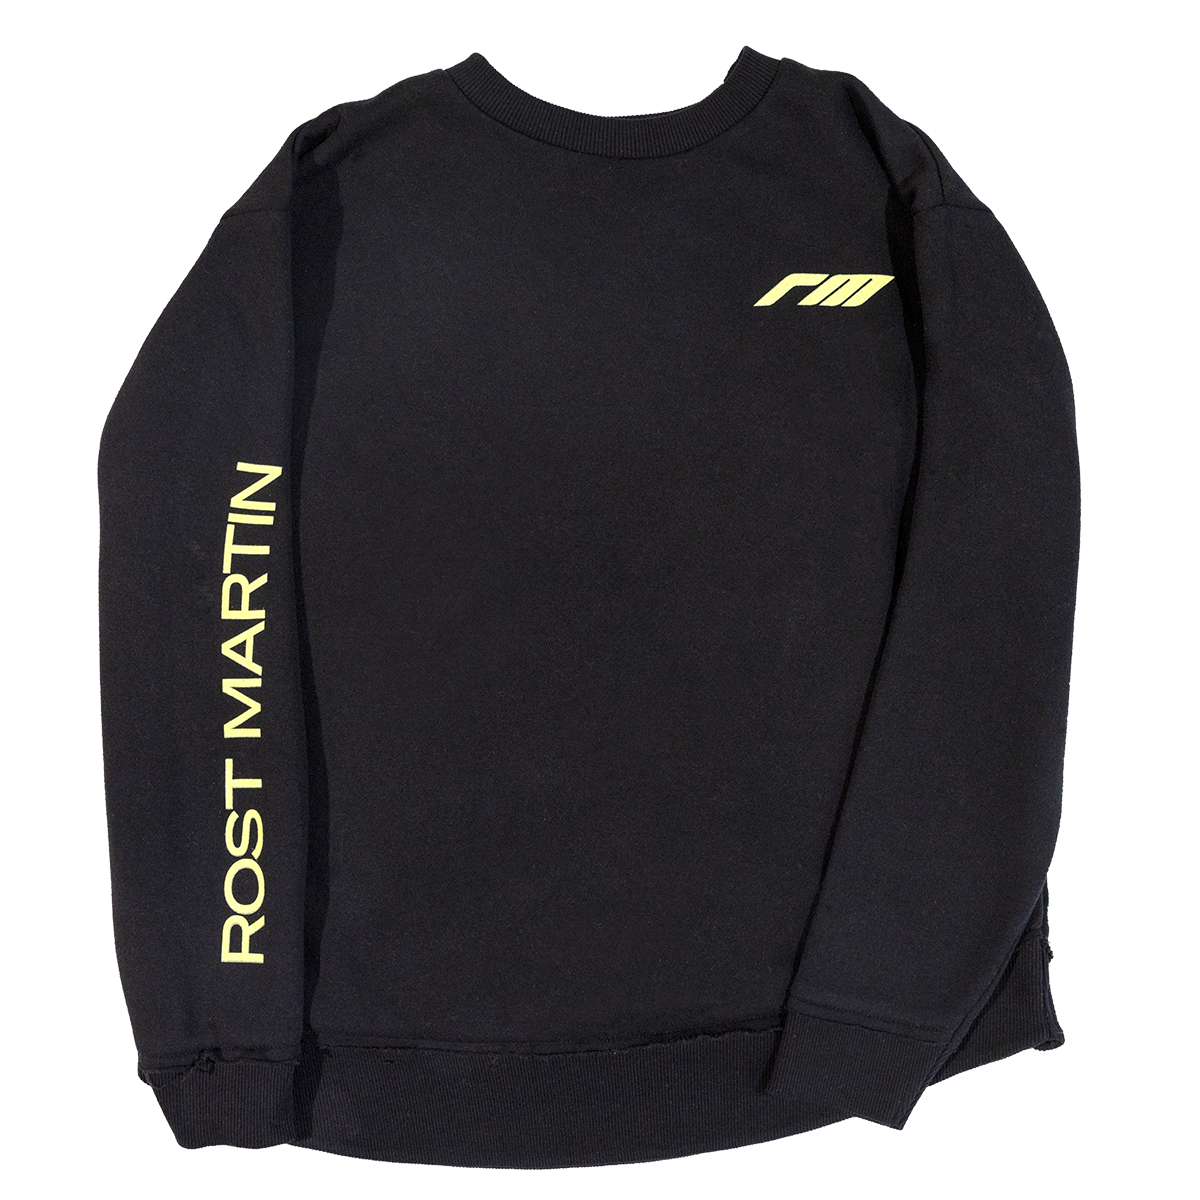 Product: Women’s Rost Martin Drop-Shoulder Sweatshirt with Droptail – Black